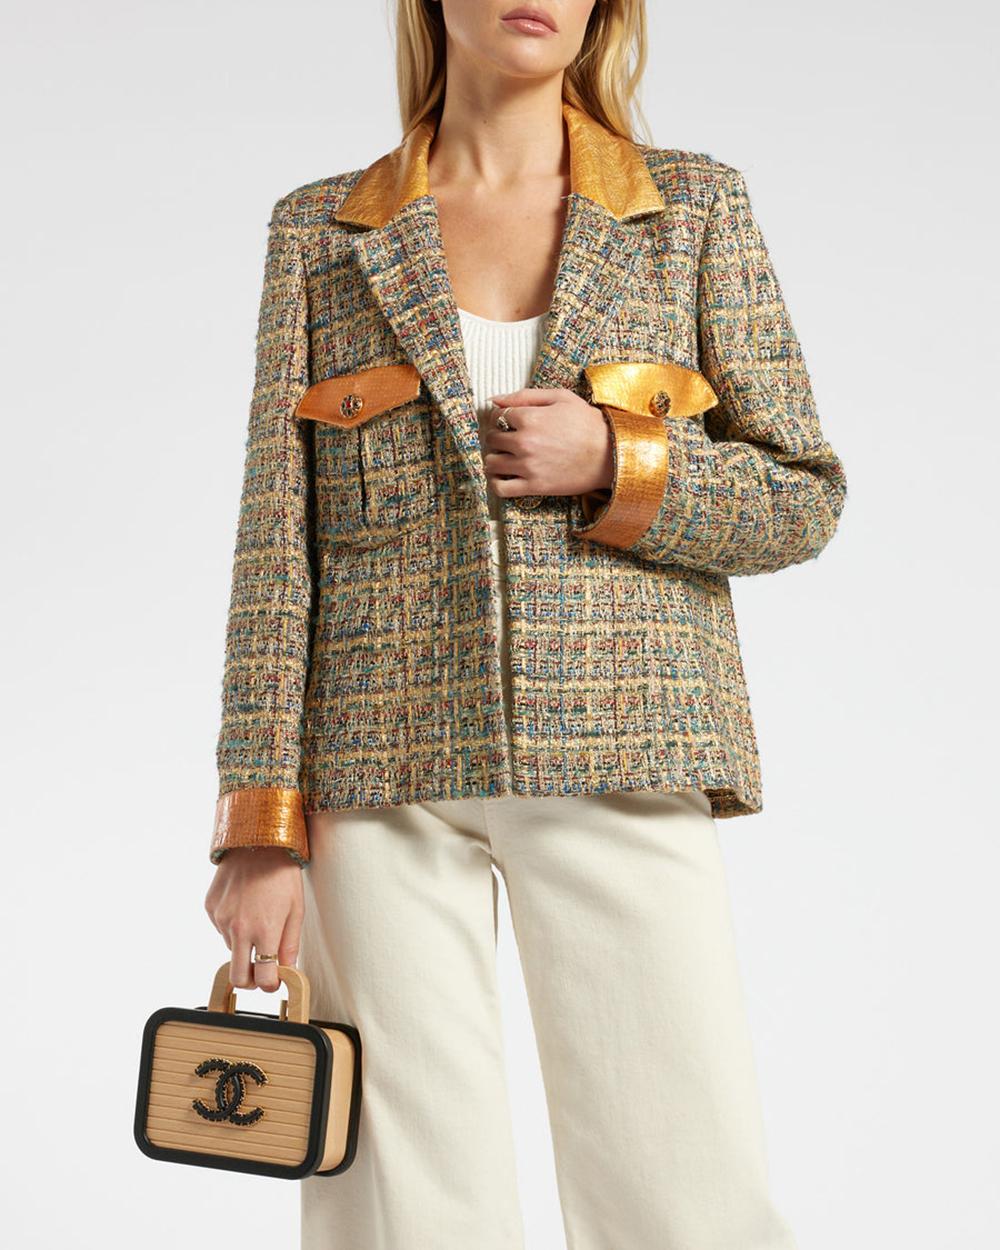 Chanel Kristem Stewart Style Paris / Egypt Tweed Jacket  For Sale 2